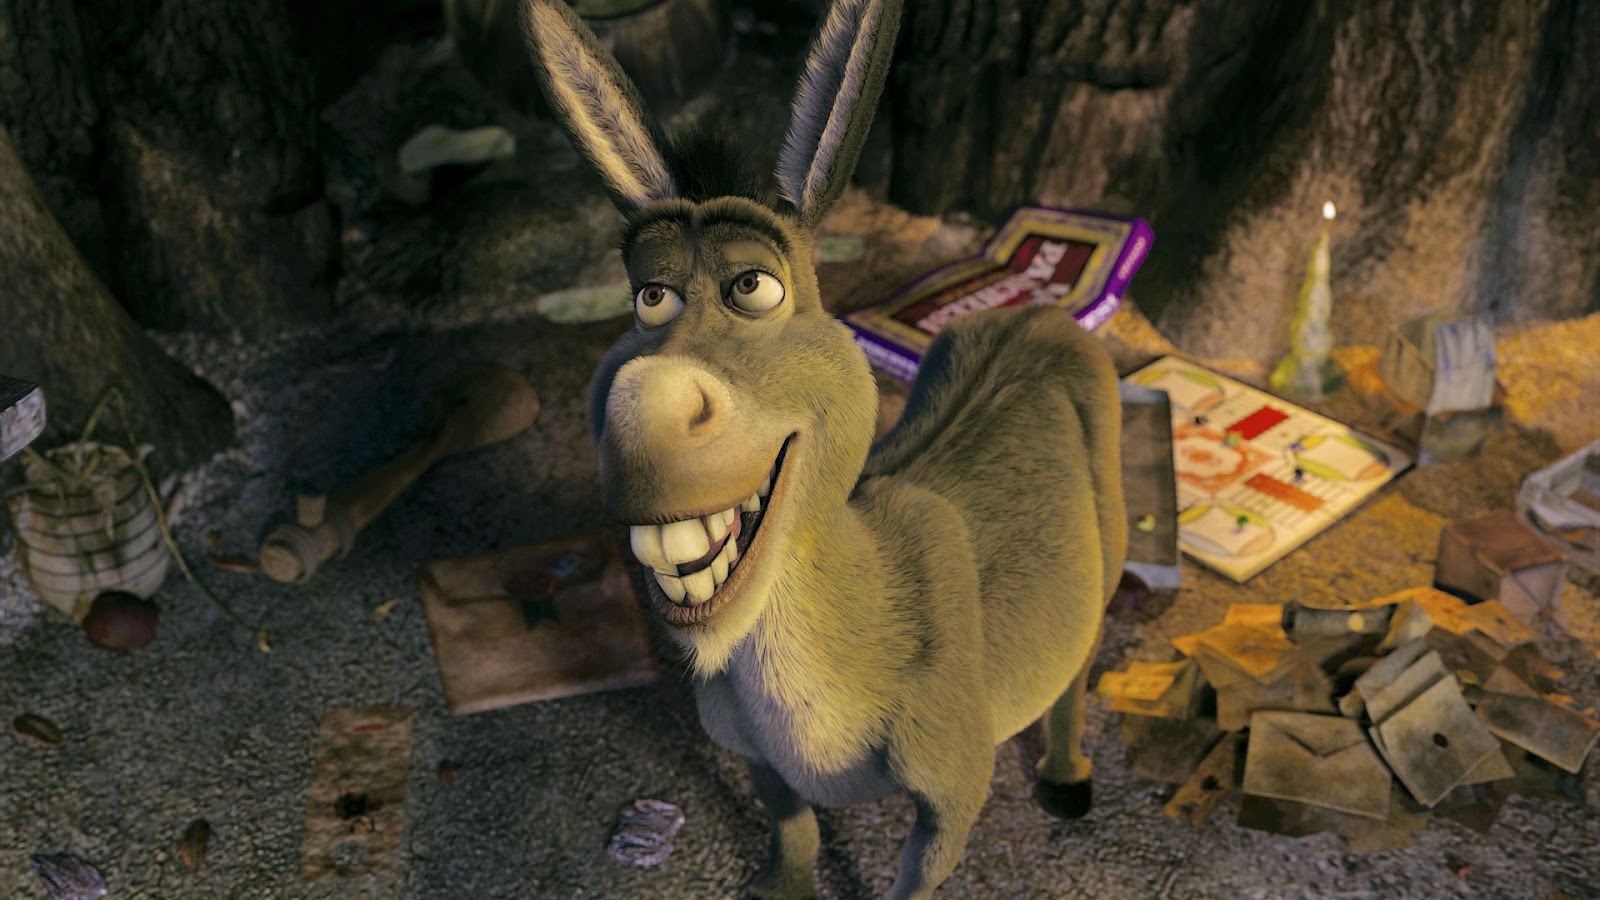 Burro de Shrek. Un burro animado de color gris sonriendo.